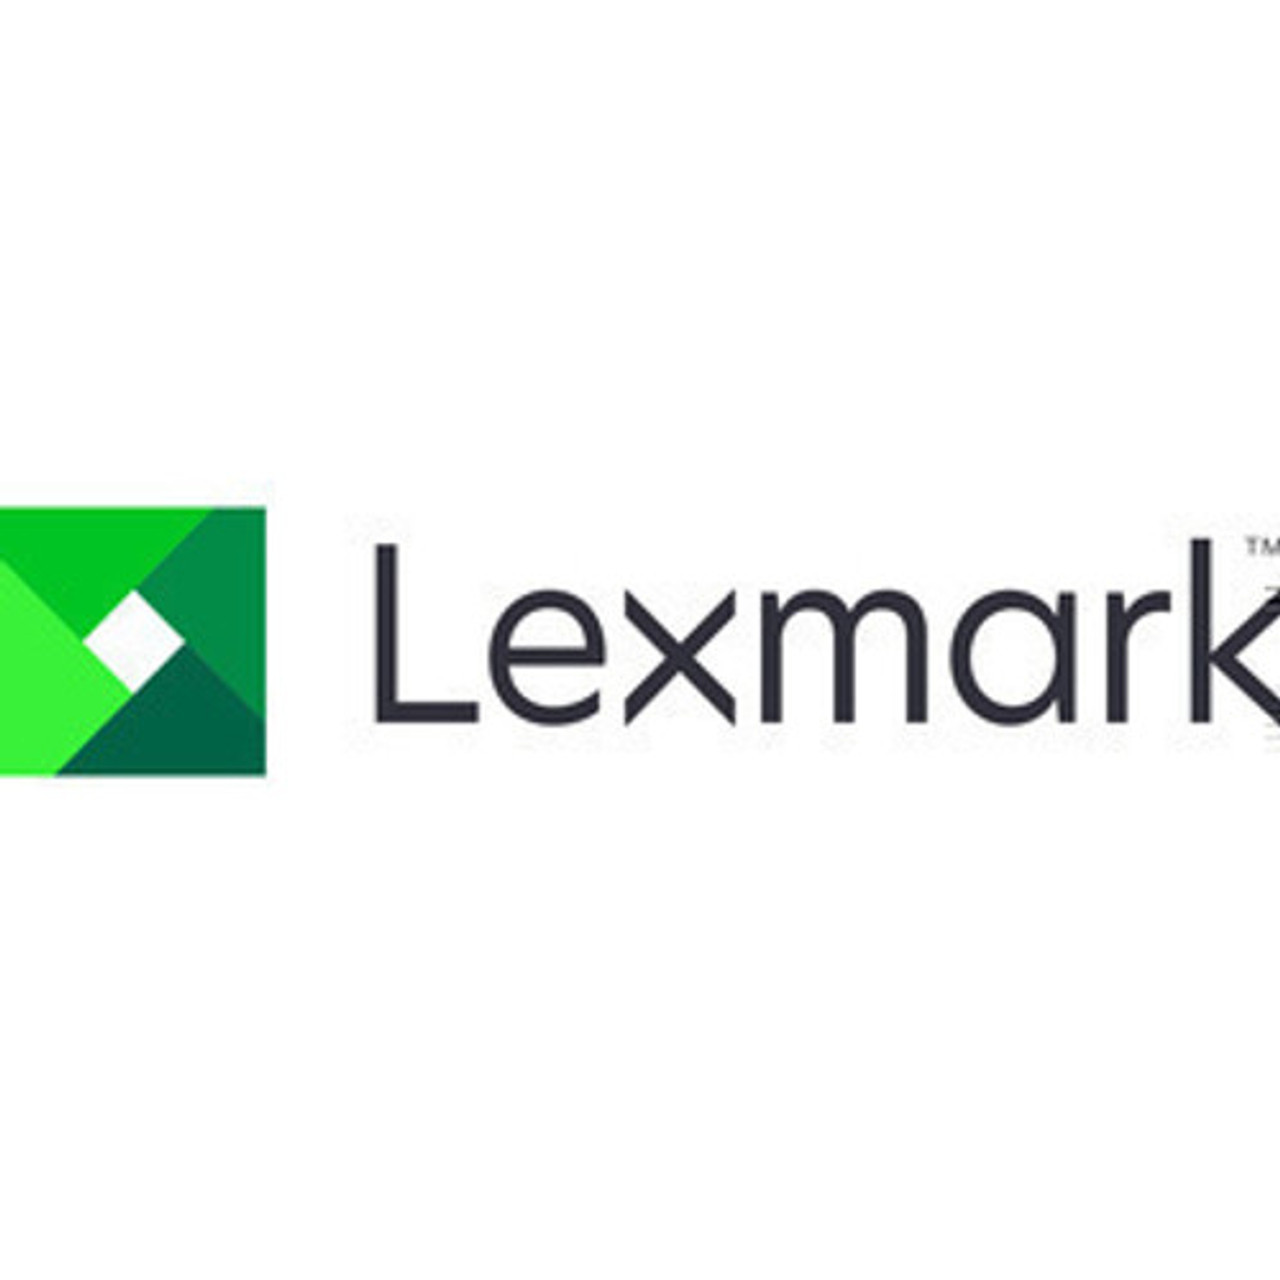 Lexmark SVC Tray Base 550-sheet - 41X0326